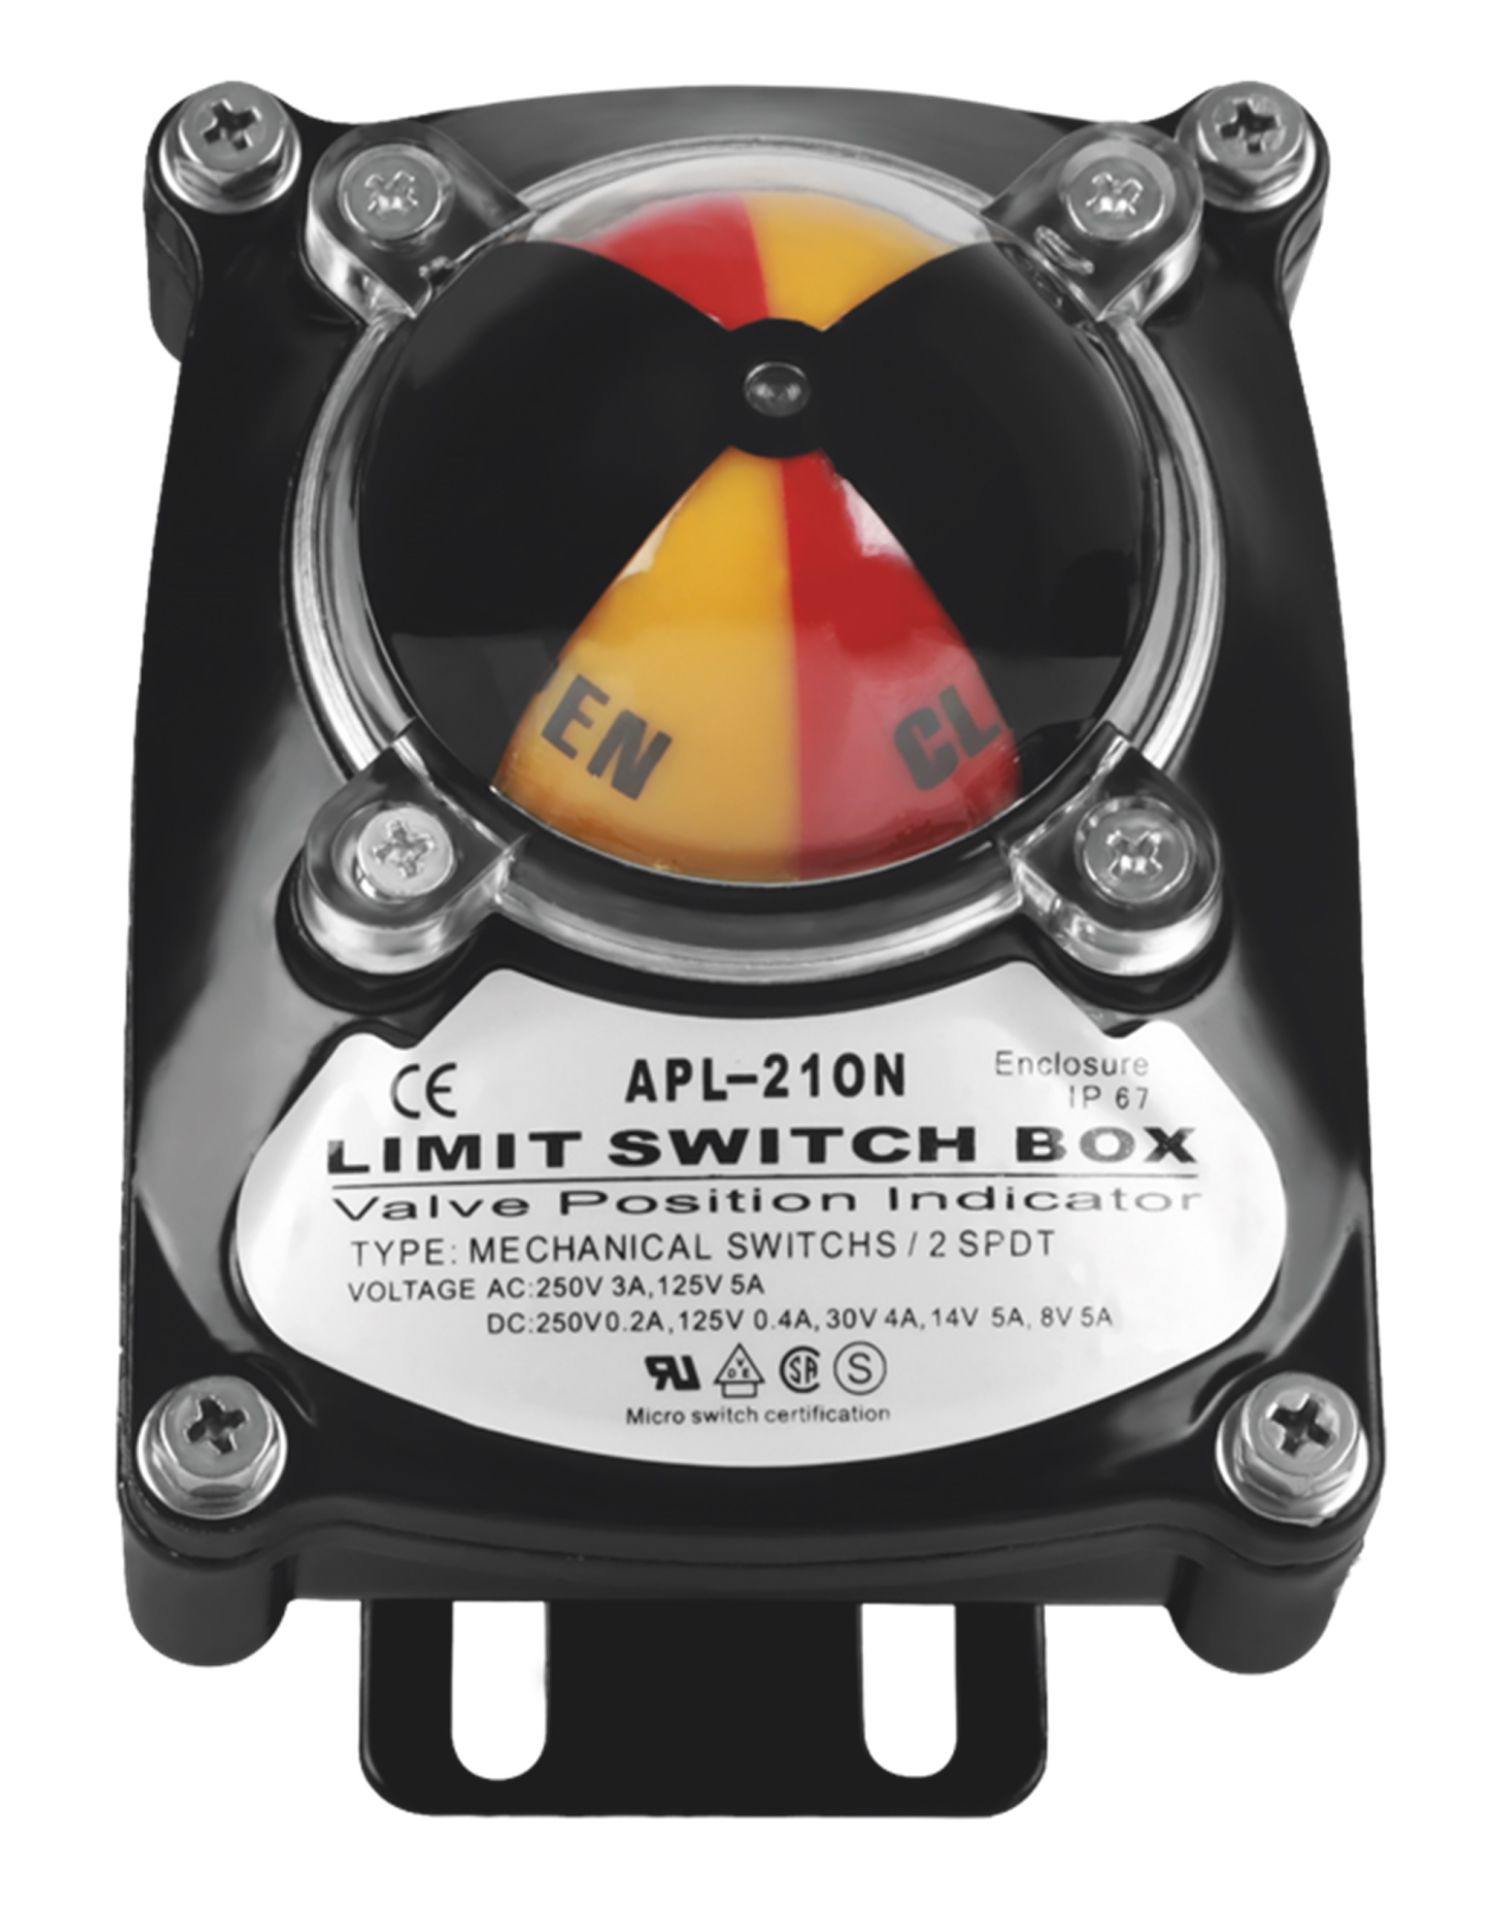 Limit switch box